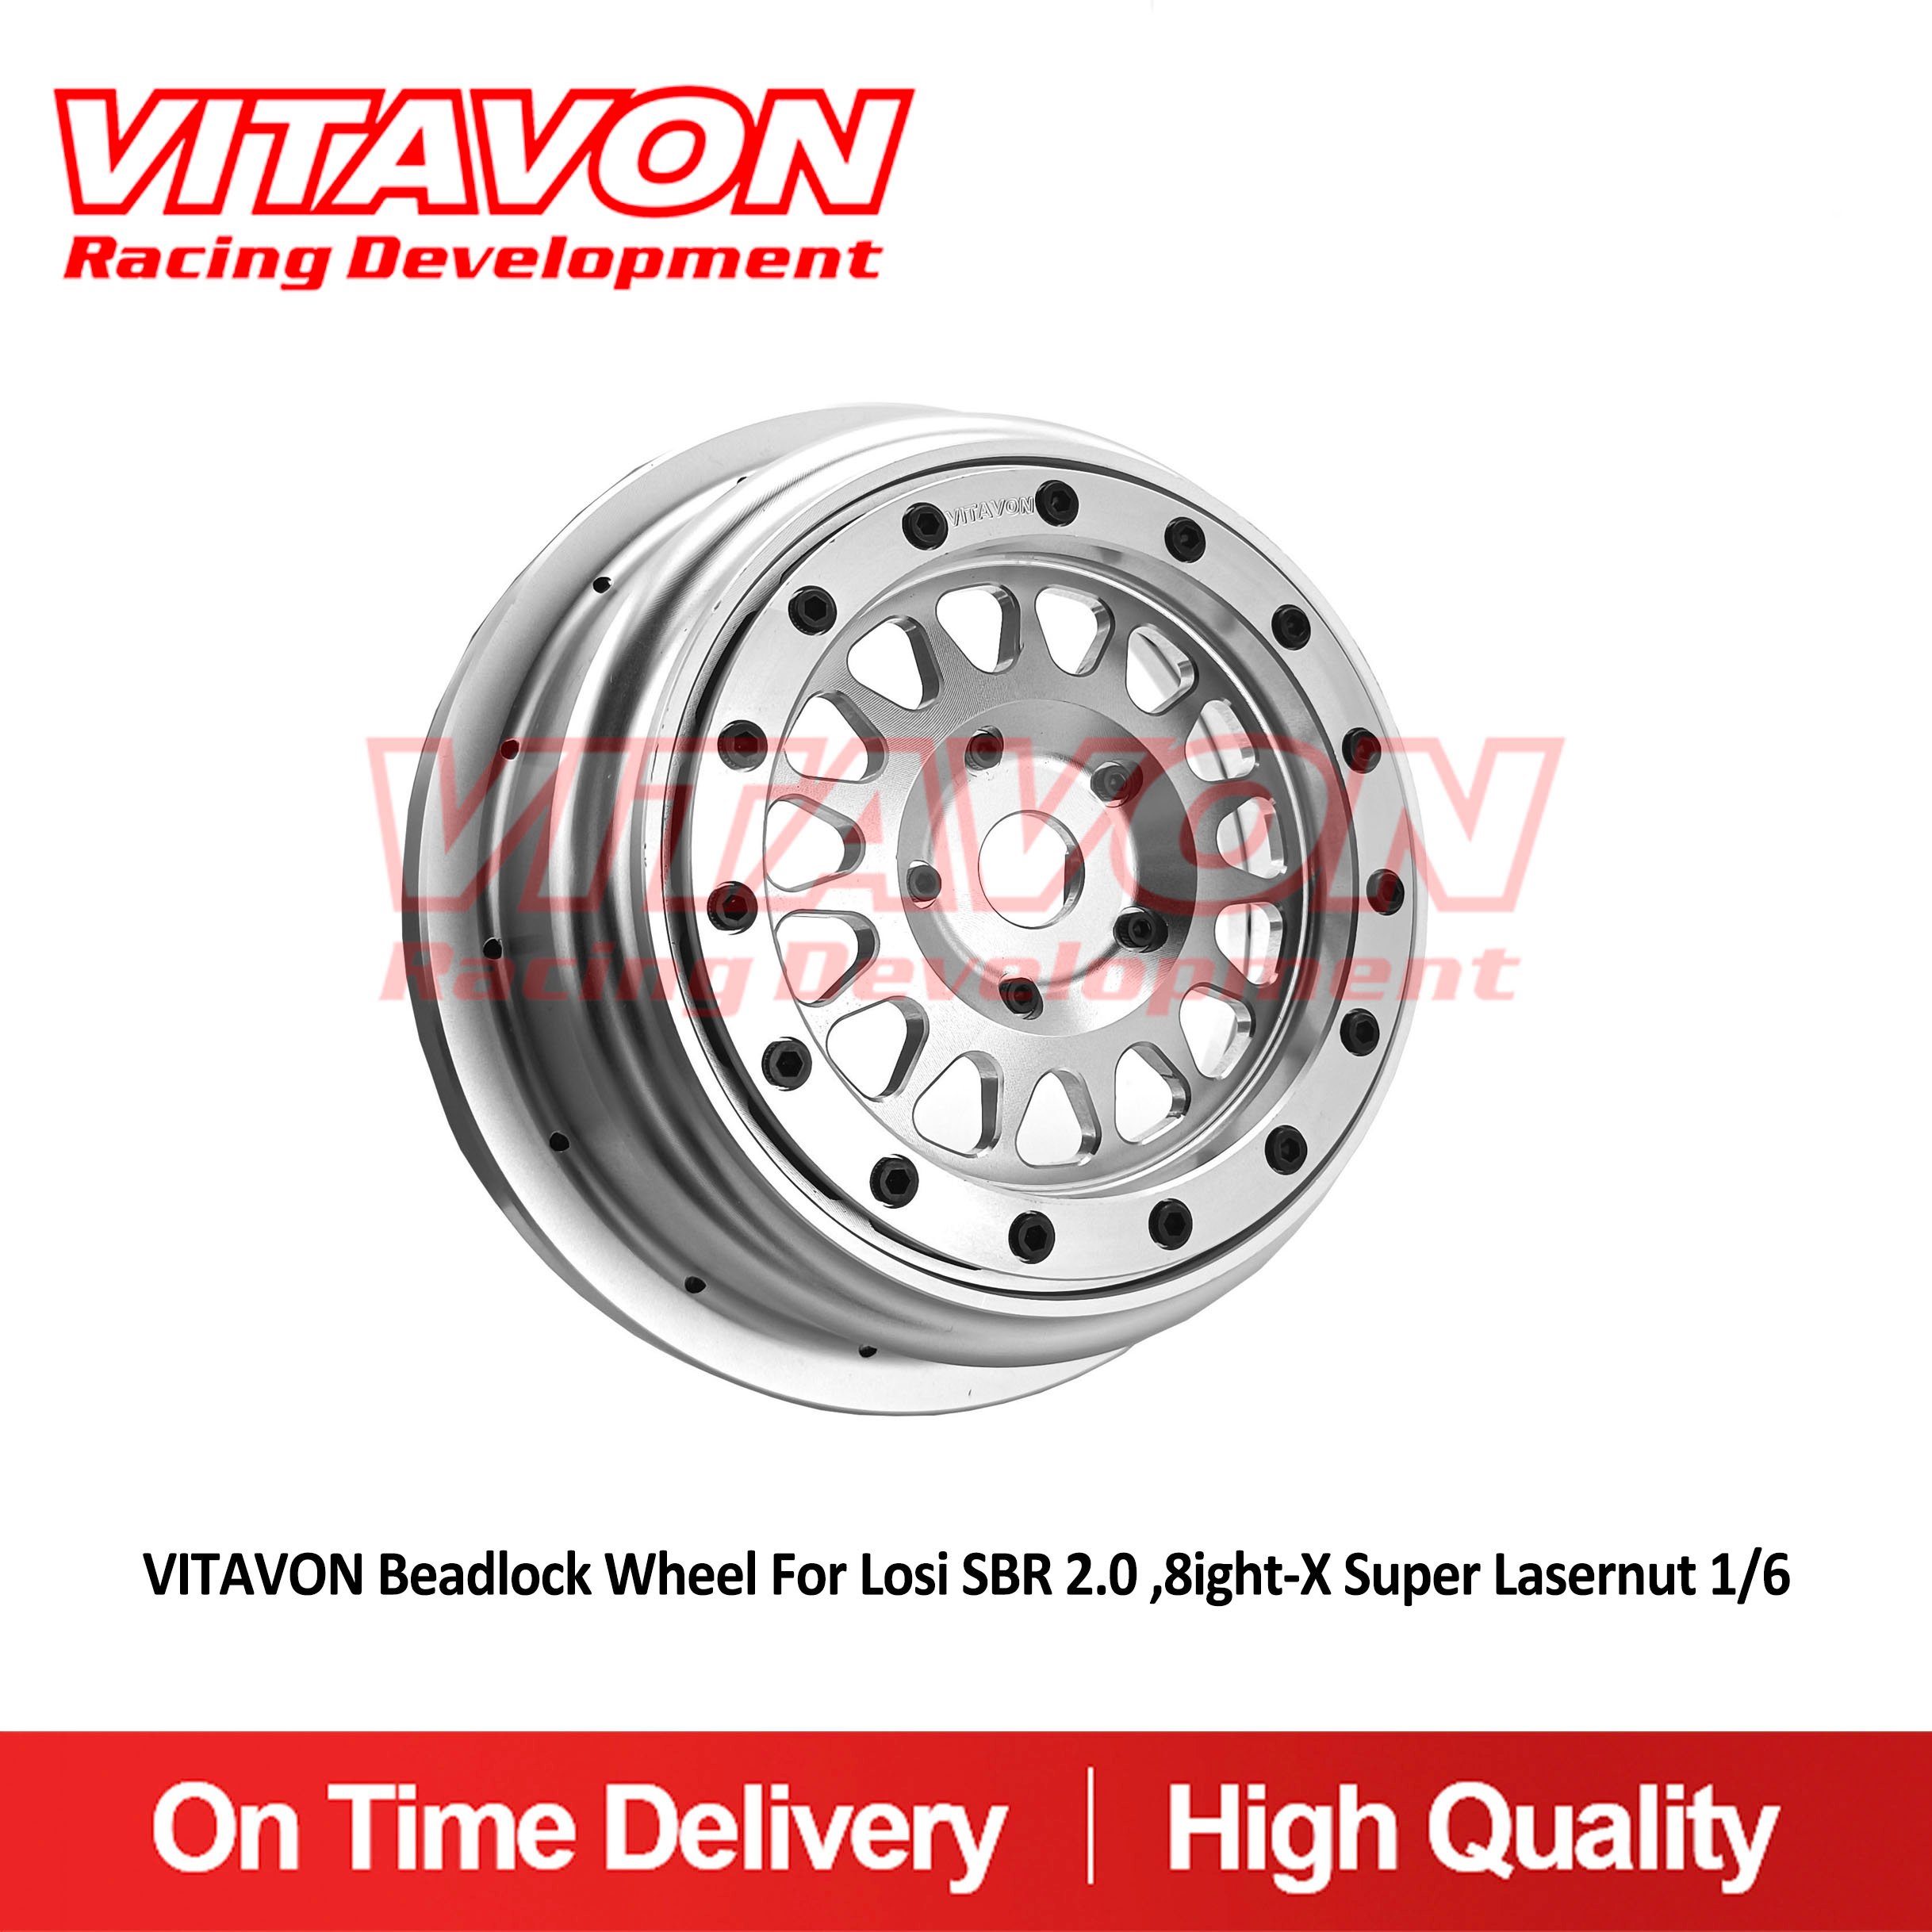 VITAVON Beadlock Wheel For Losi SBR 2.0 ,8ight-X Super Lasernut 1/6